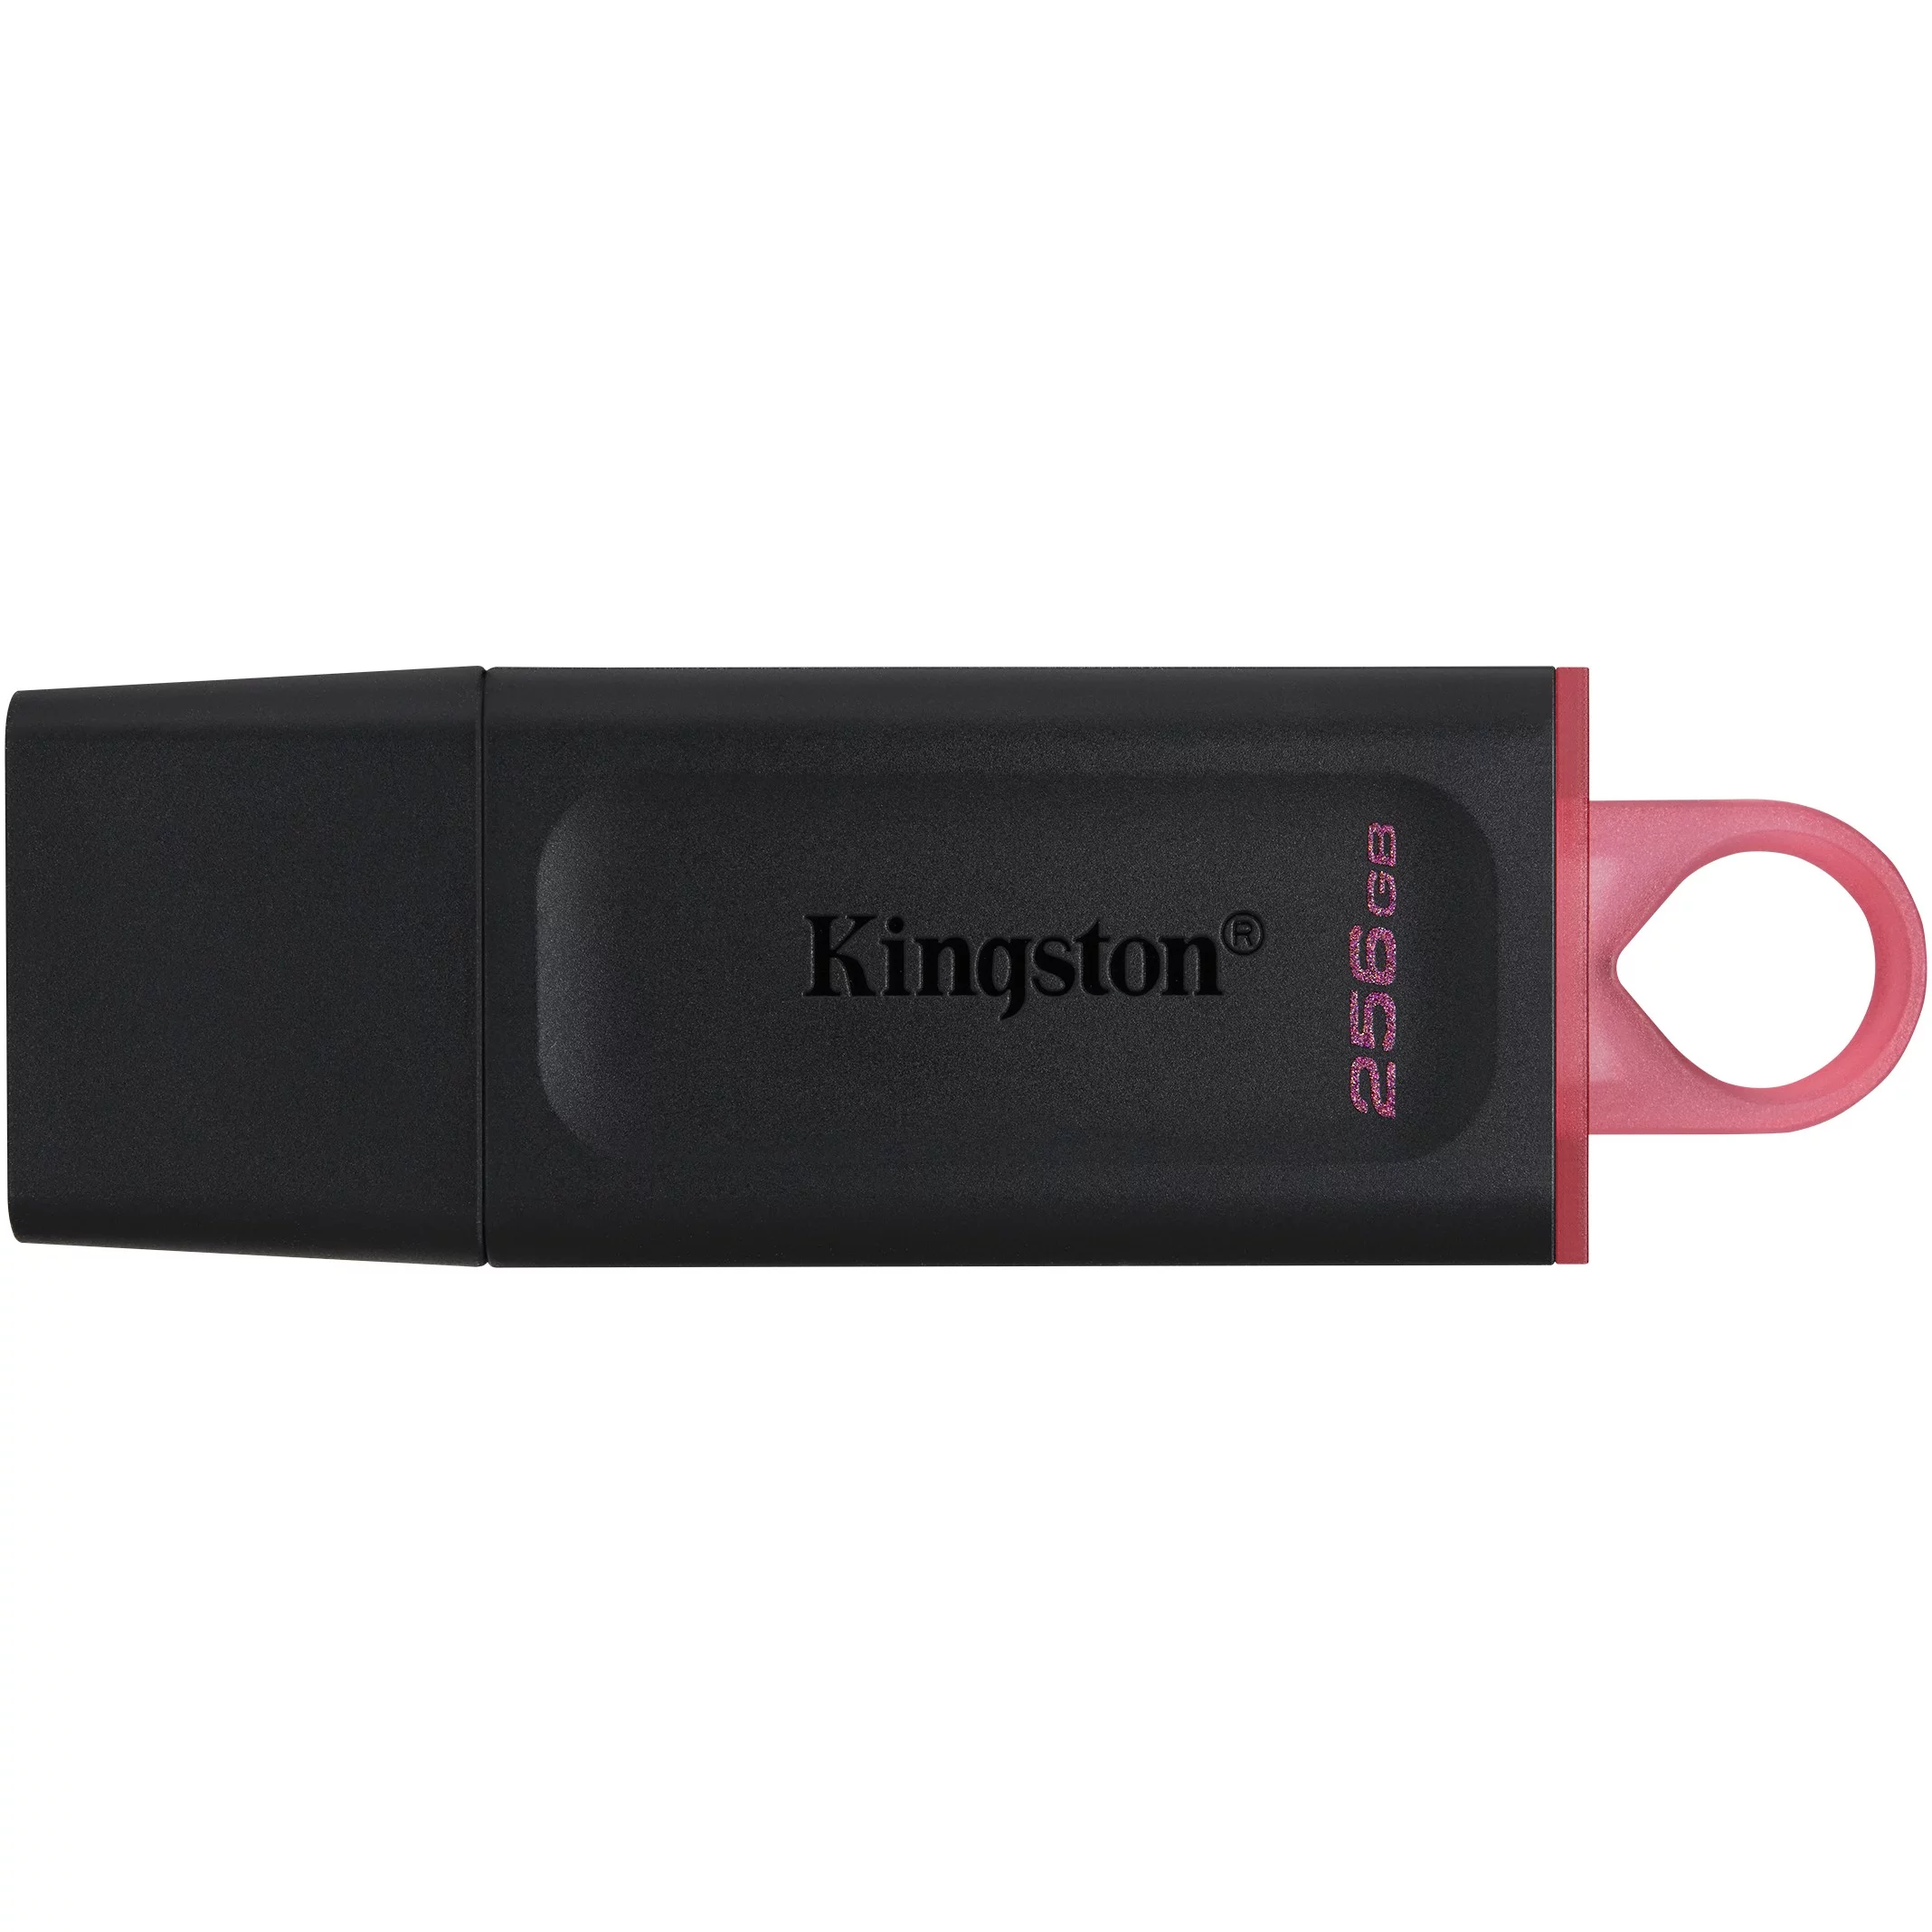 Kingston DataTraveler Exodia USB-Stick 256 GB schwarz